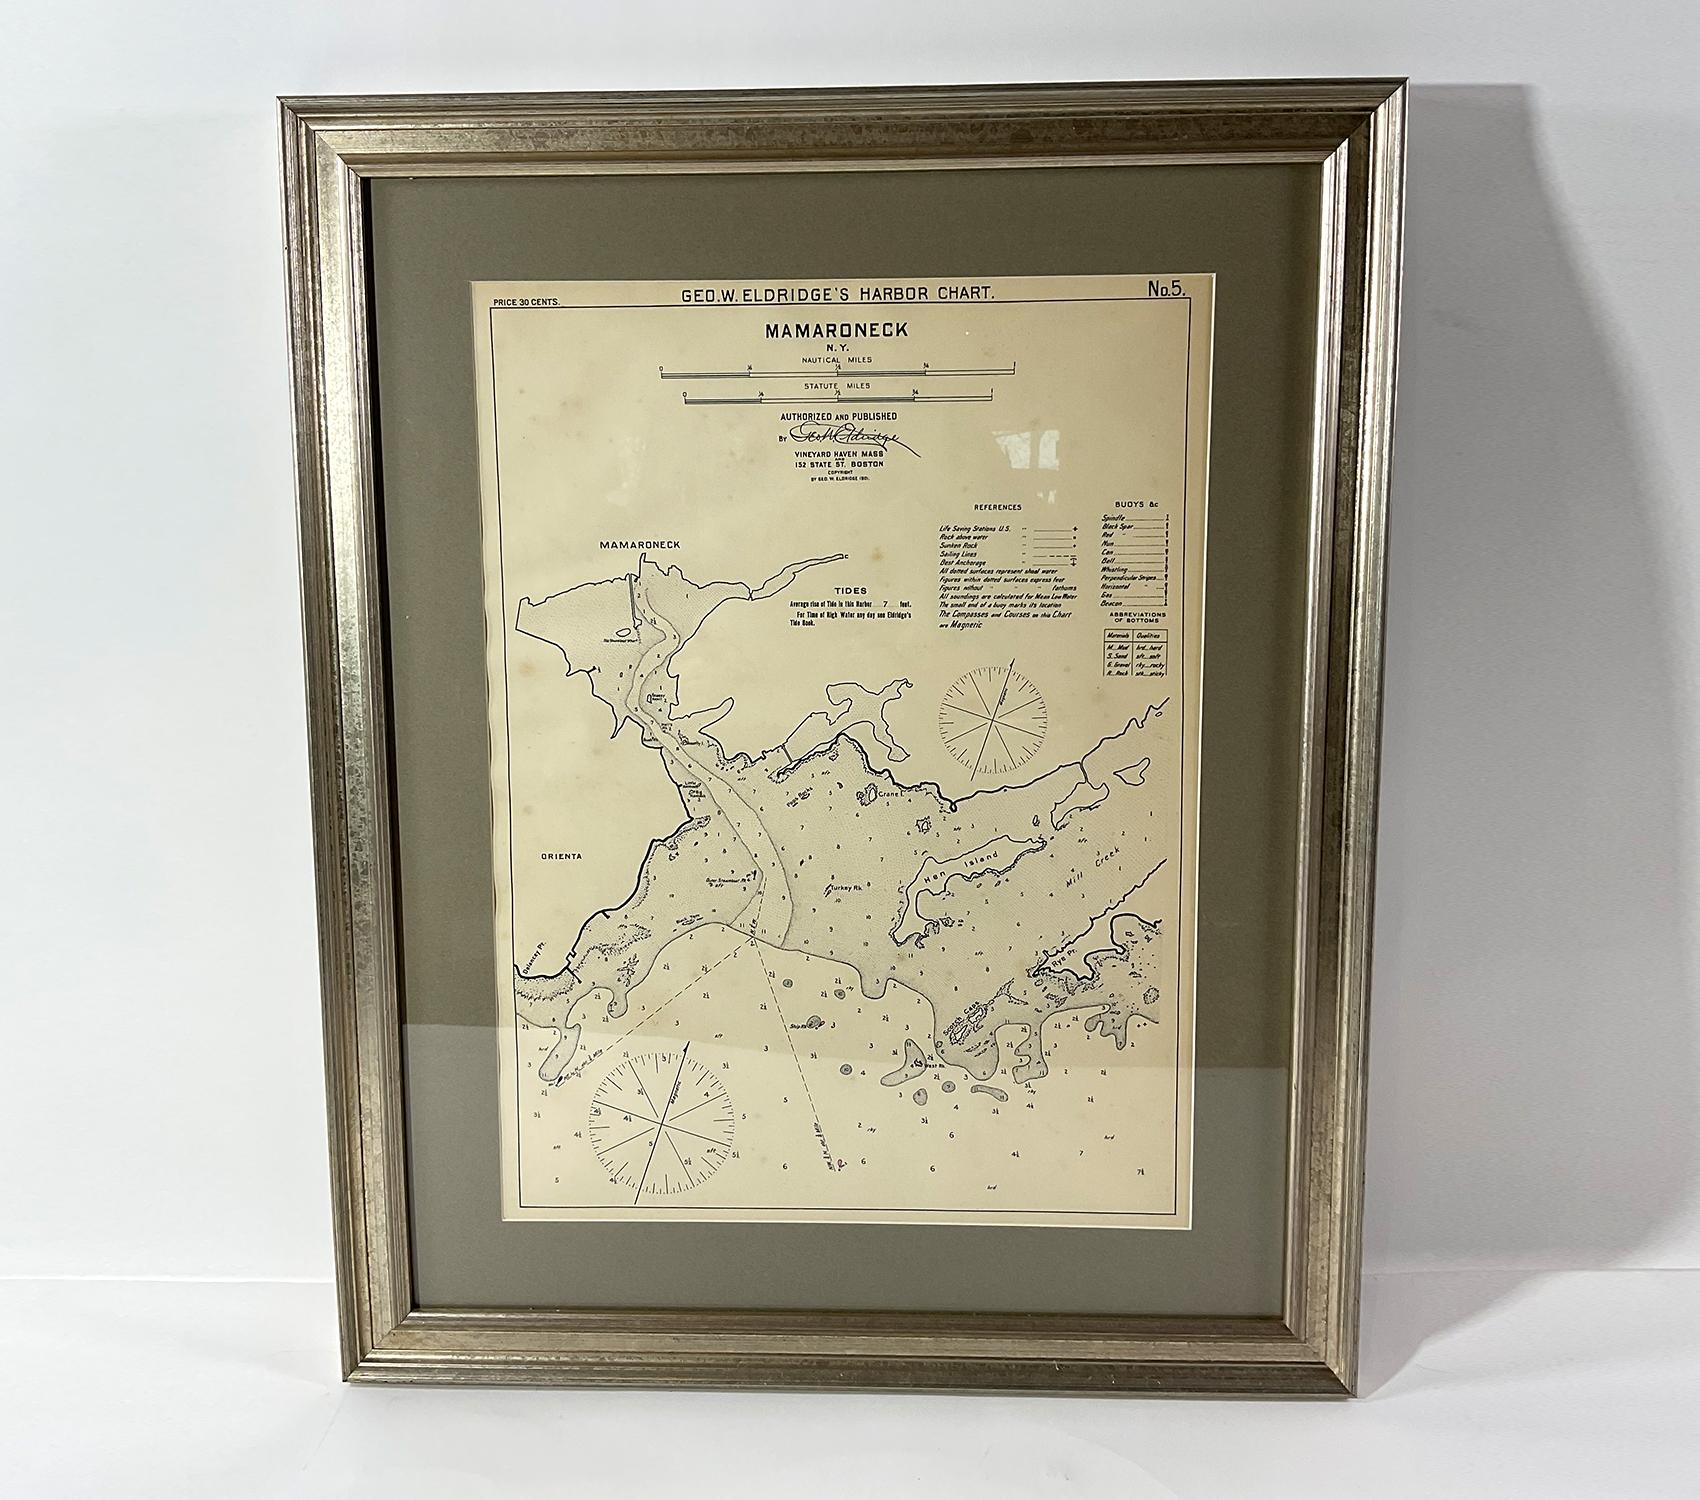 1901 Chart of Mamaroneck, New York. Showing Mamaroneck harbor, Hen Island, Rye Point, Scotch Caps, Orienta, Delancey Point, etc.. Chart is by George Eldridge of State St., Boston. Dated 1901.